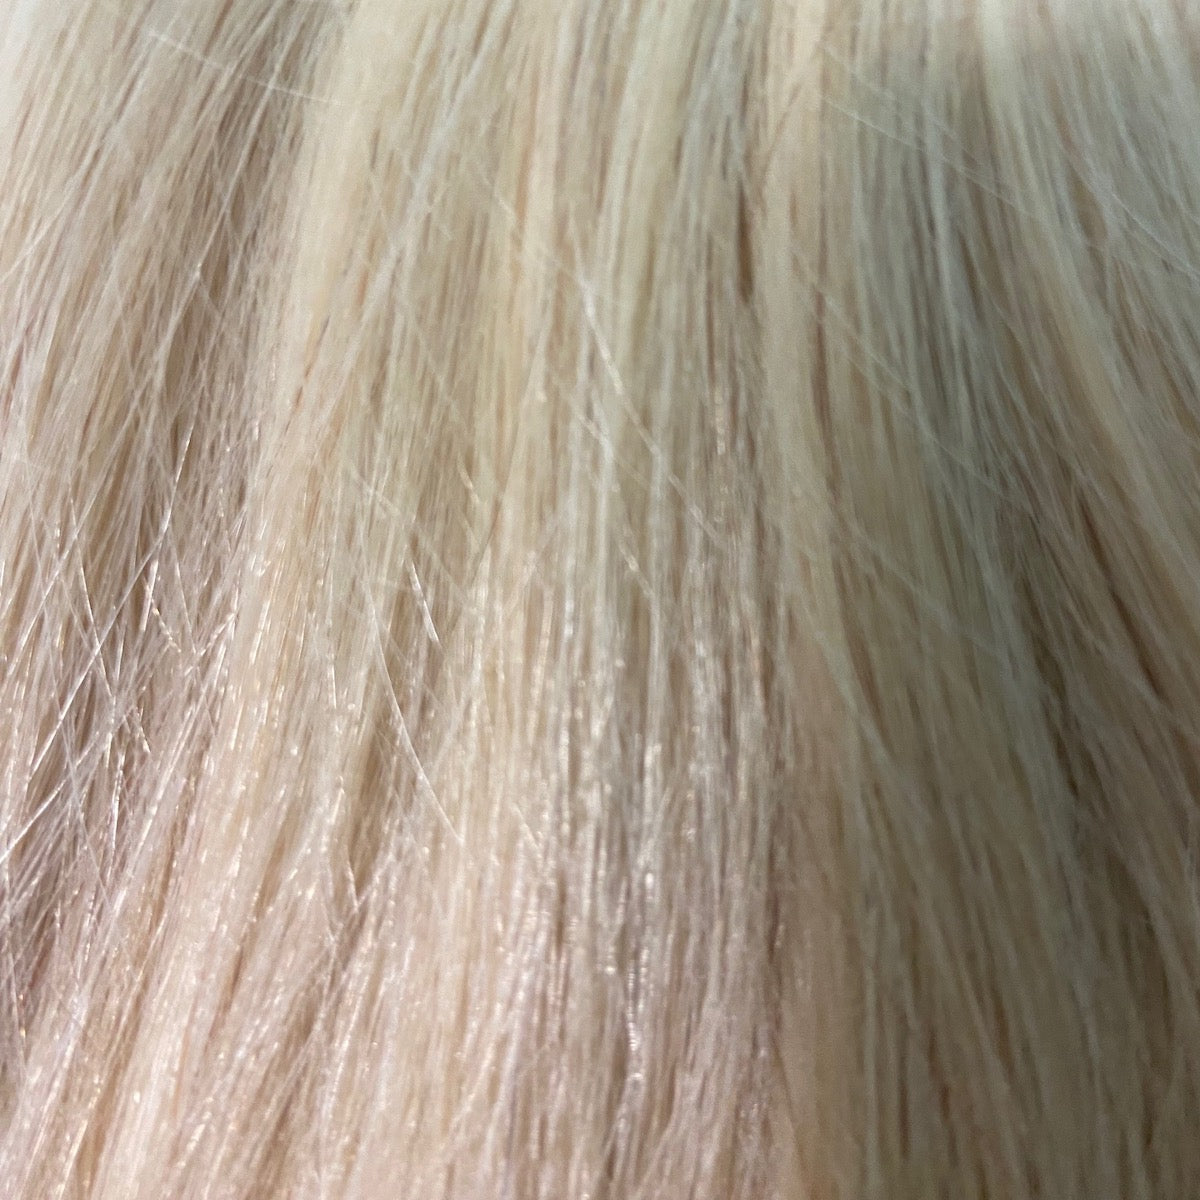 Genius (Micro) Weft 18" 68g Professional Hair Extensions - #19 Desert Blonde